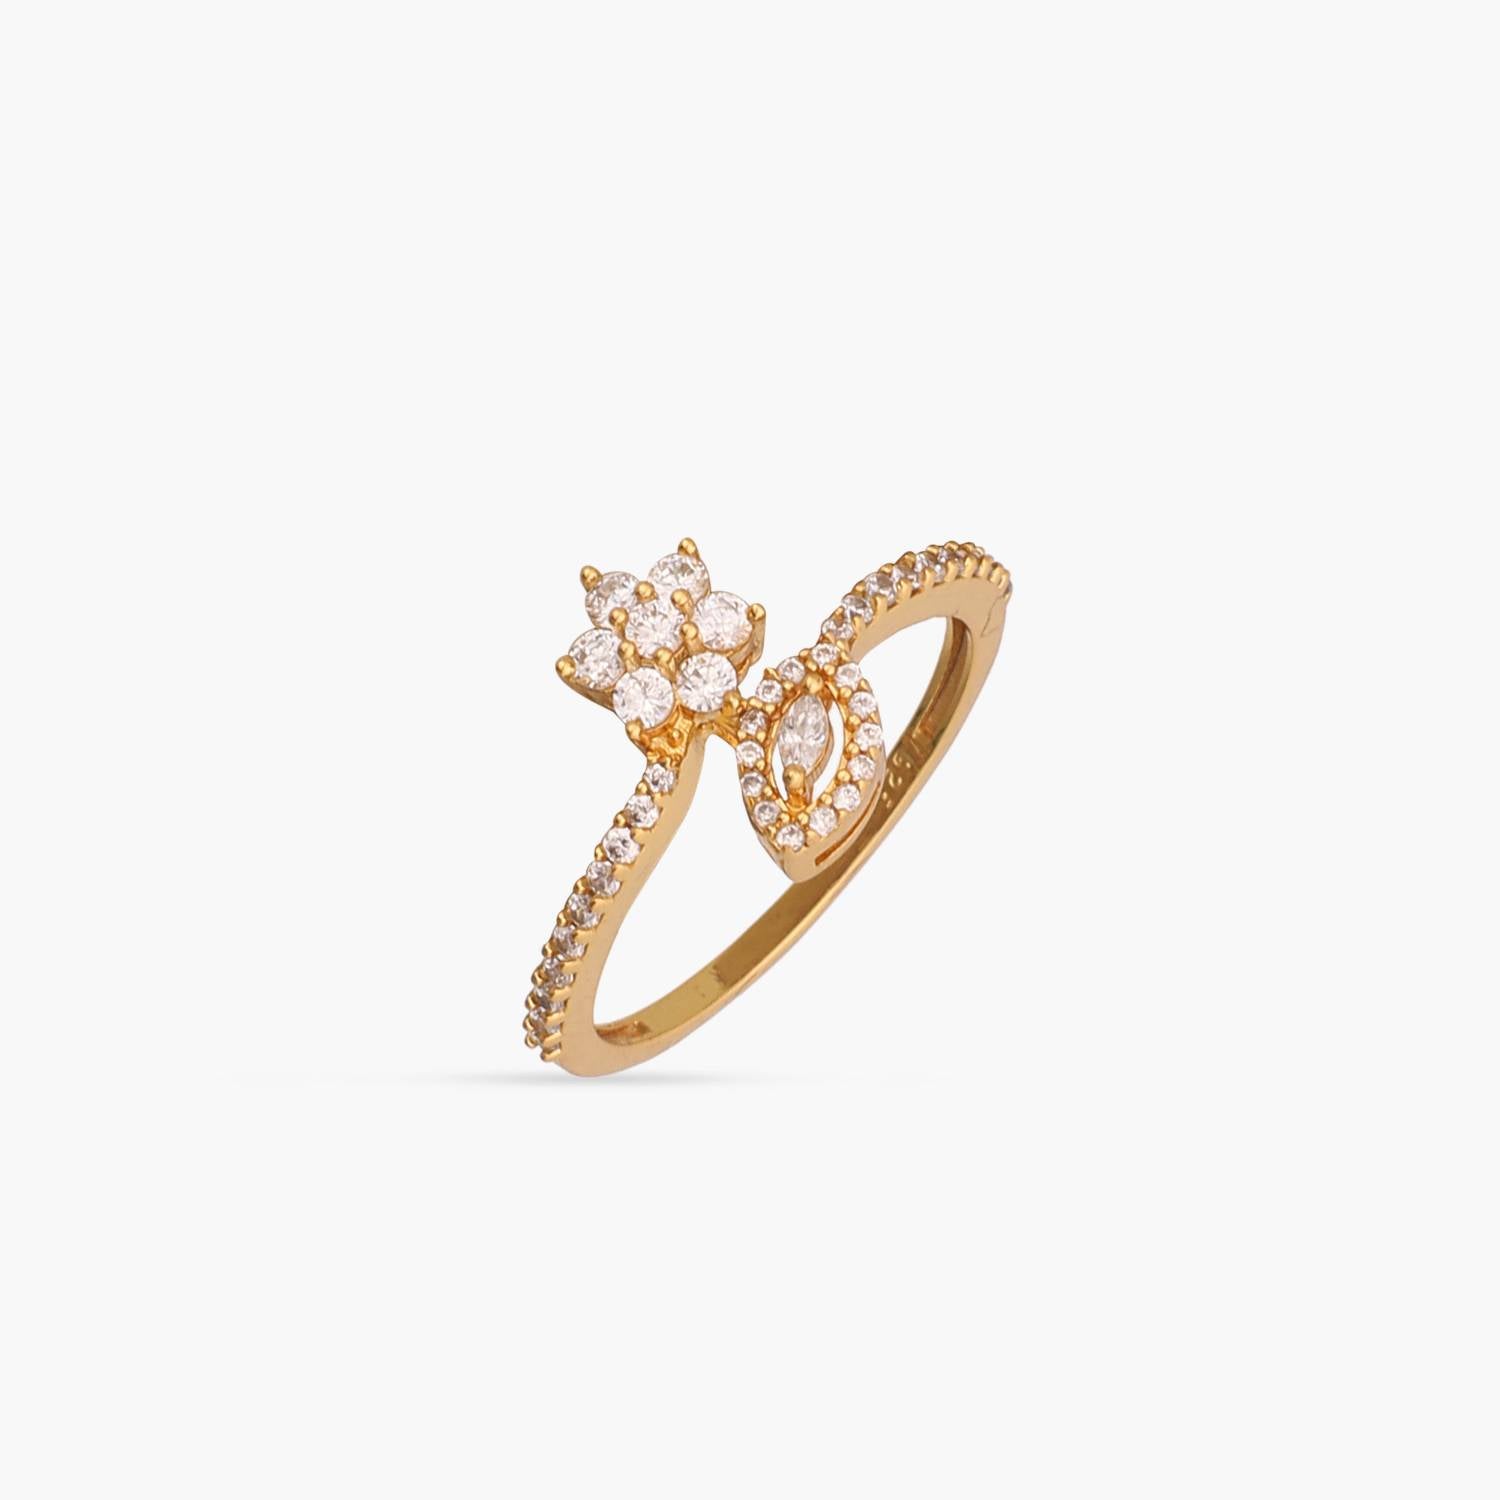 Buy Jewelgenics Gold Havy Ring Designer Delicate Rings For Boys & Mens  1(Pcs) at Amazon.in